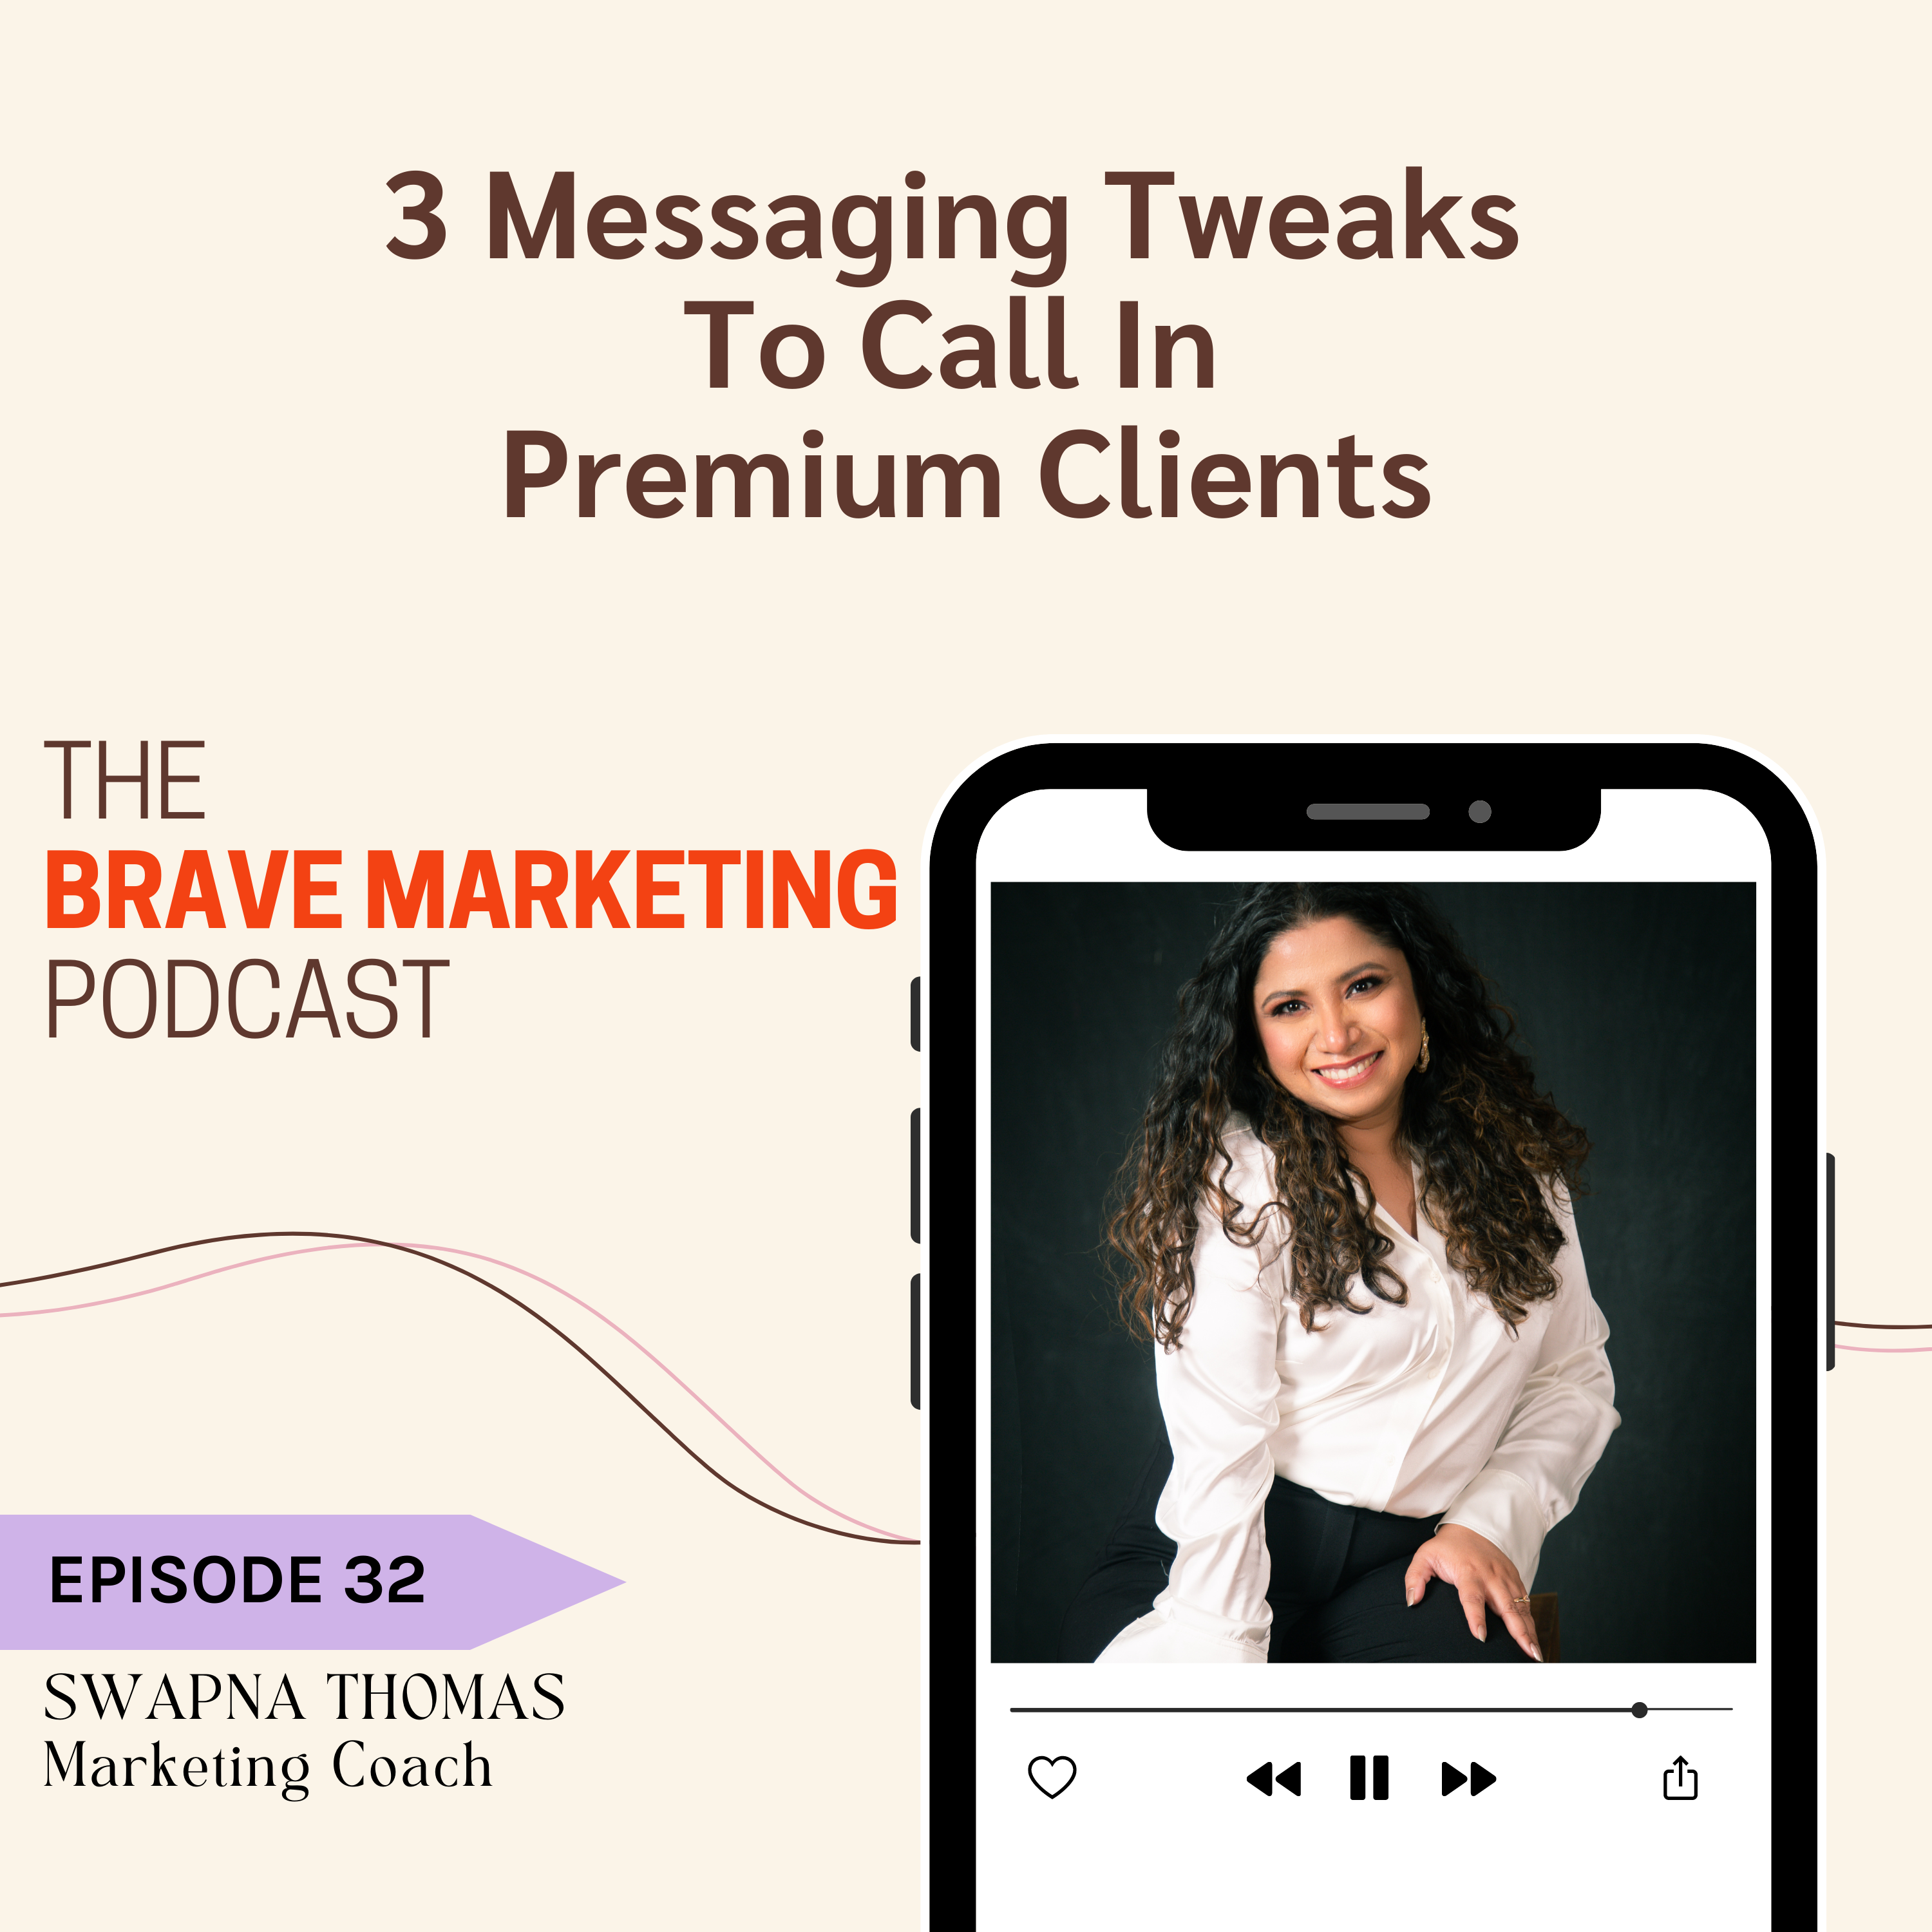 3 Messaging Tweaks To Call In Premium Clients